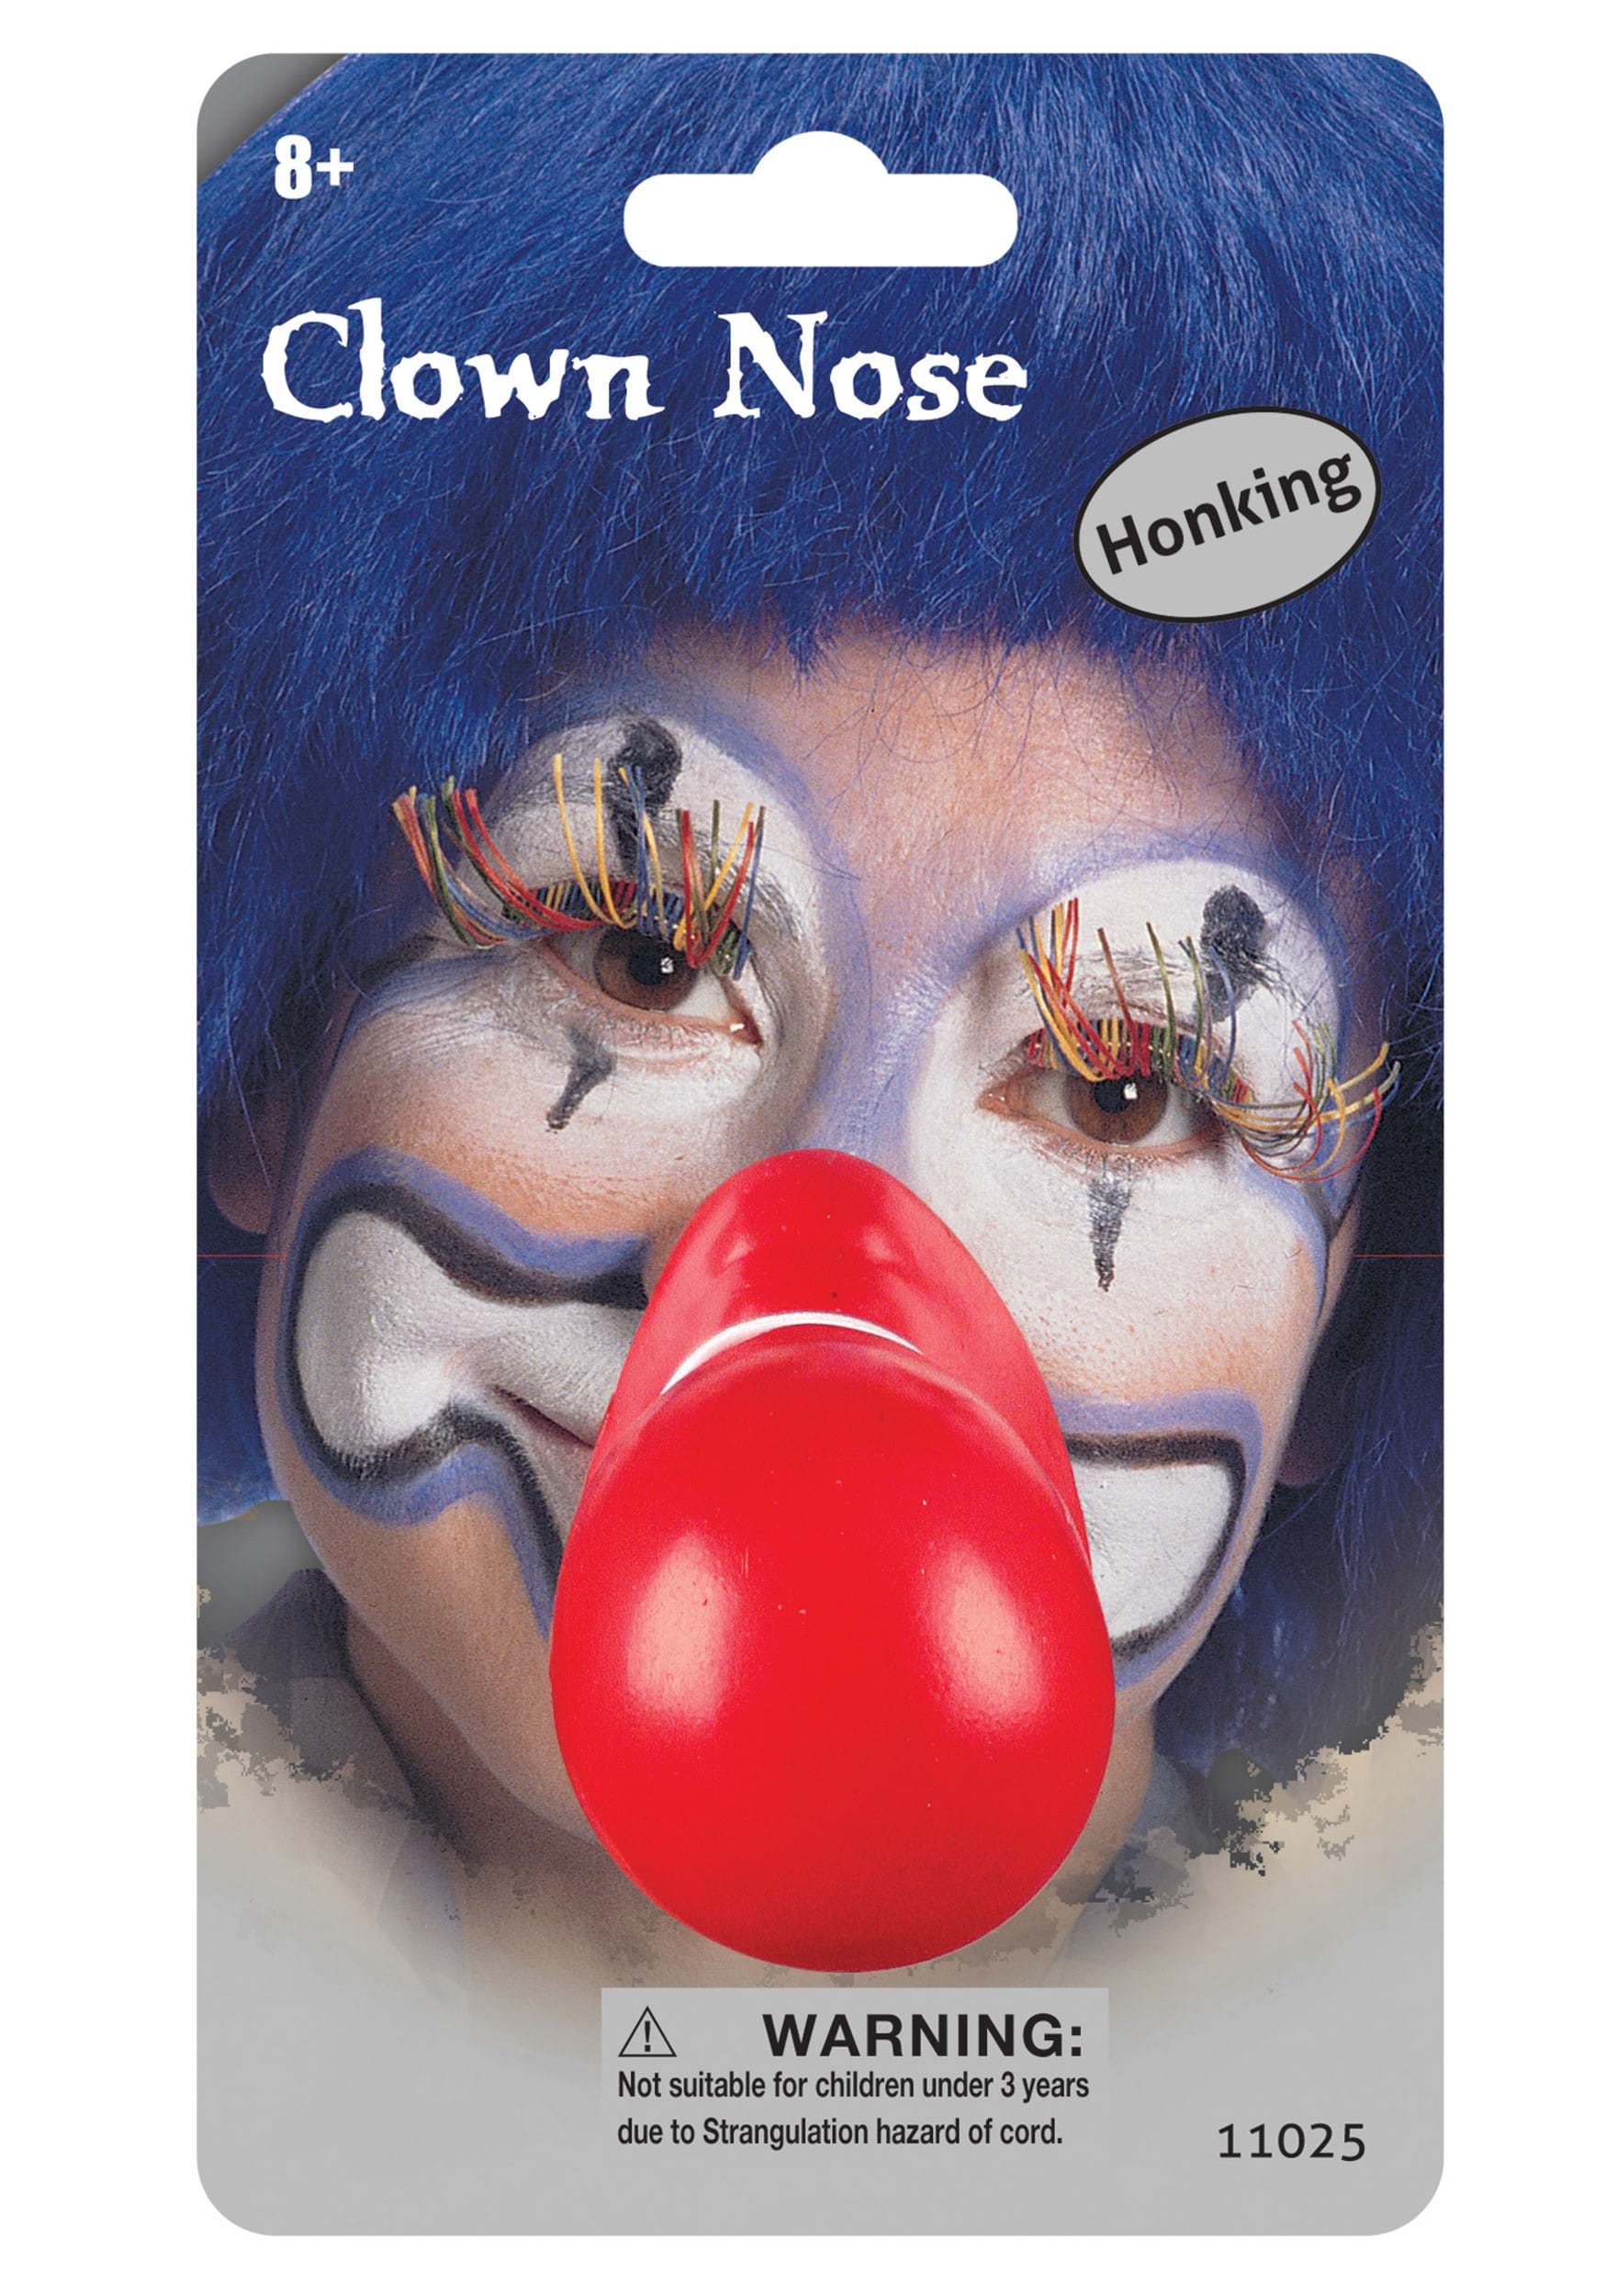 Clown Nose That Honks